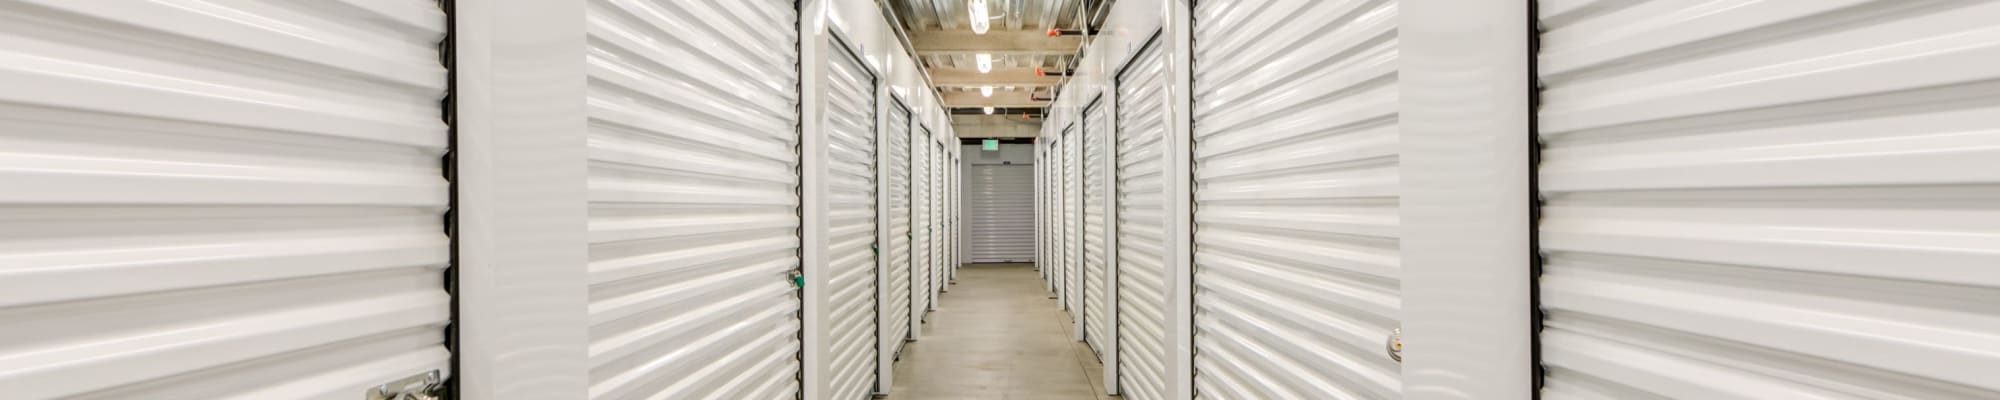 Menifee CA storage features